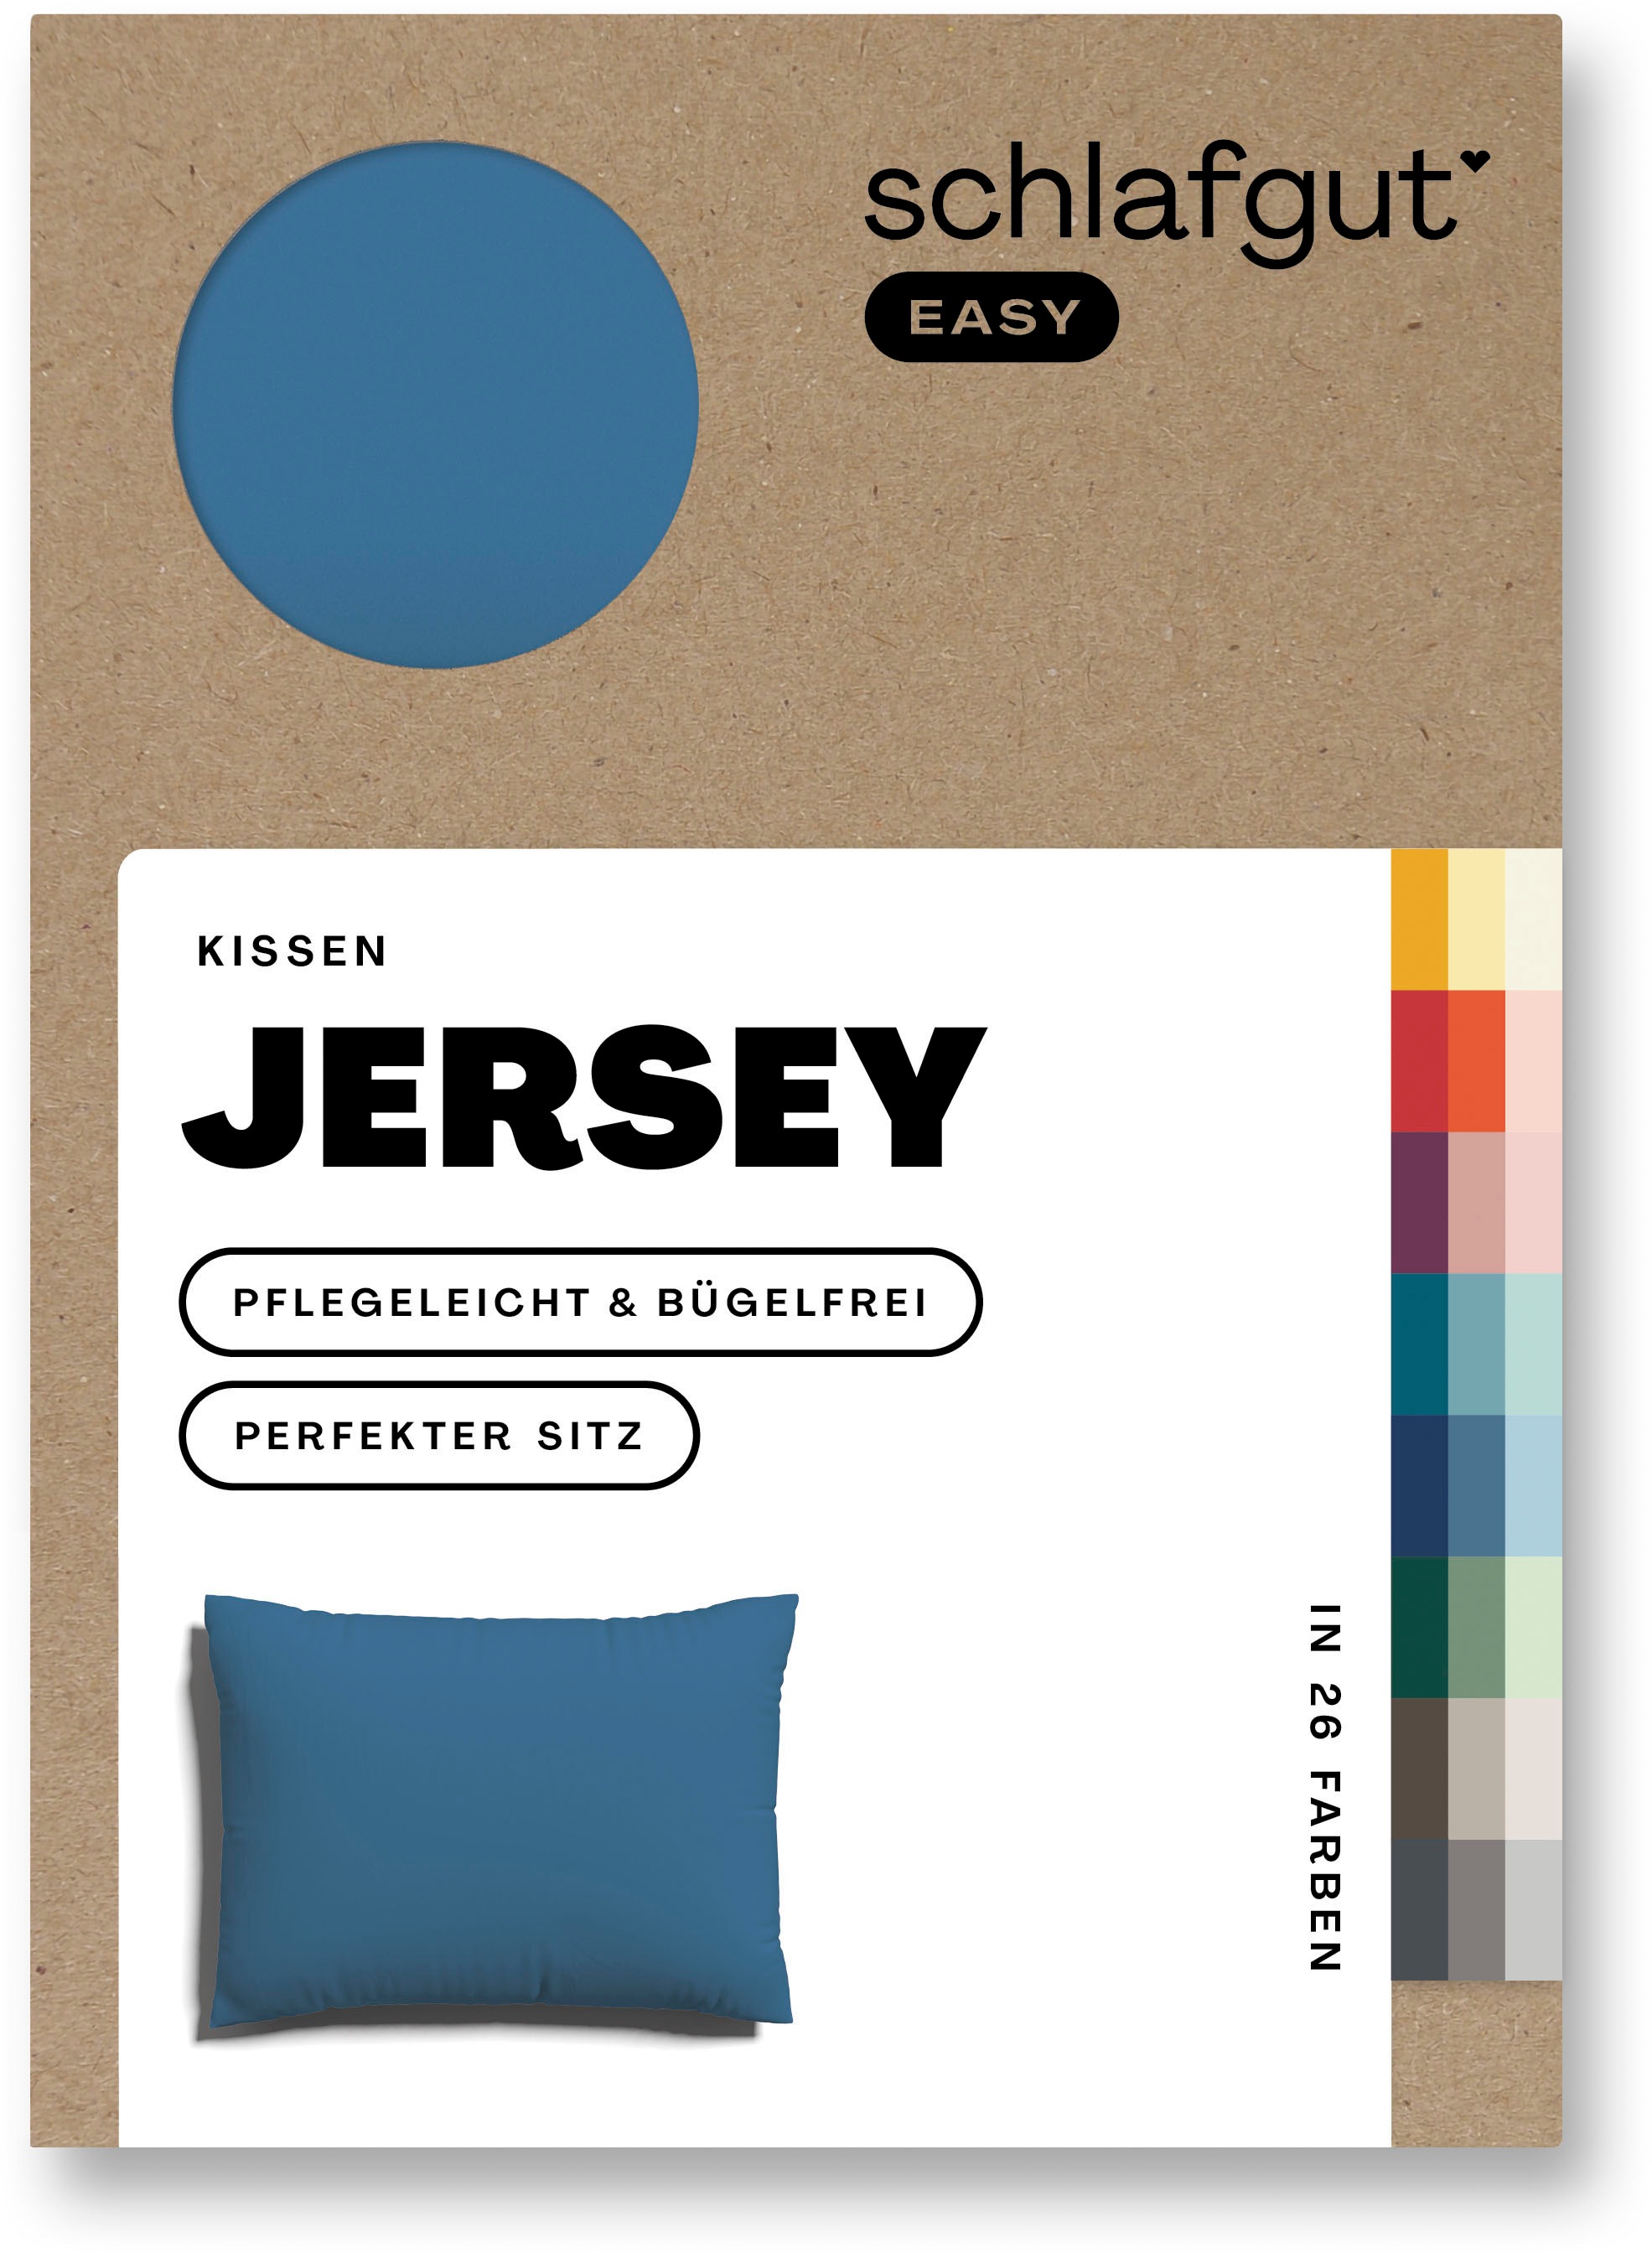 Schlafgut Kissenbezug »EASY Jersey«, (1 St.), Kissenhülle mit Reißverschluss, weich und saugfähig, Kissenbezug